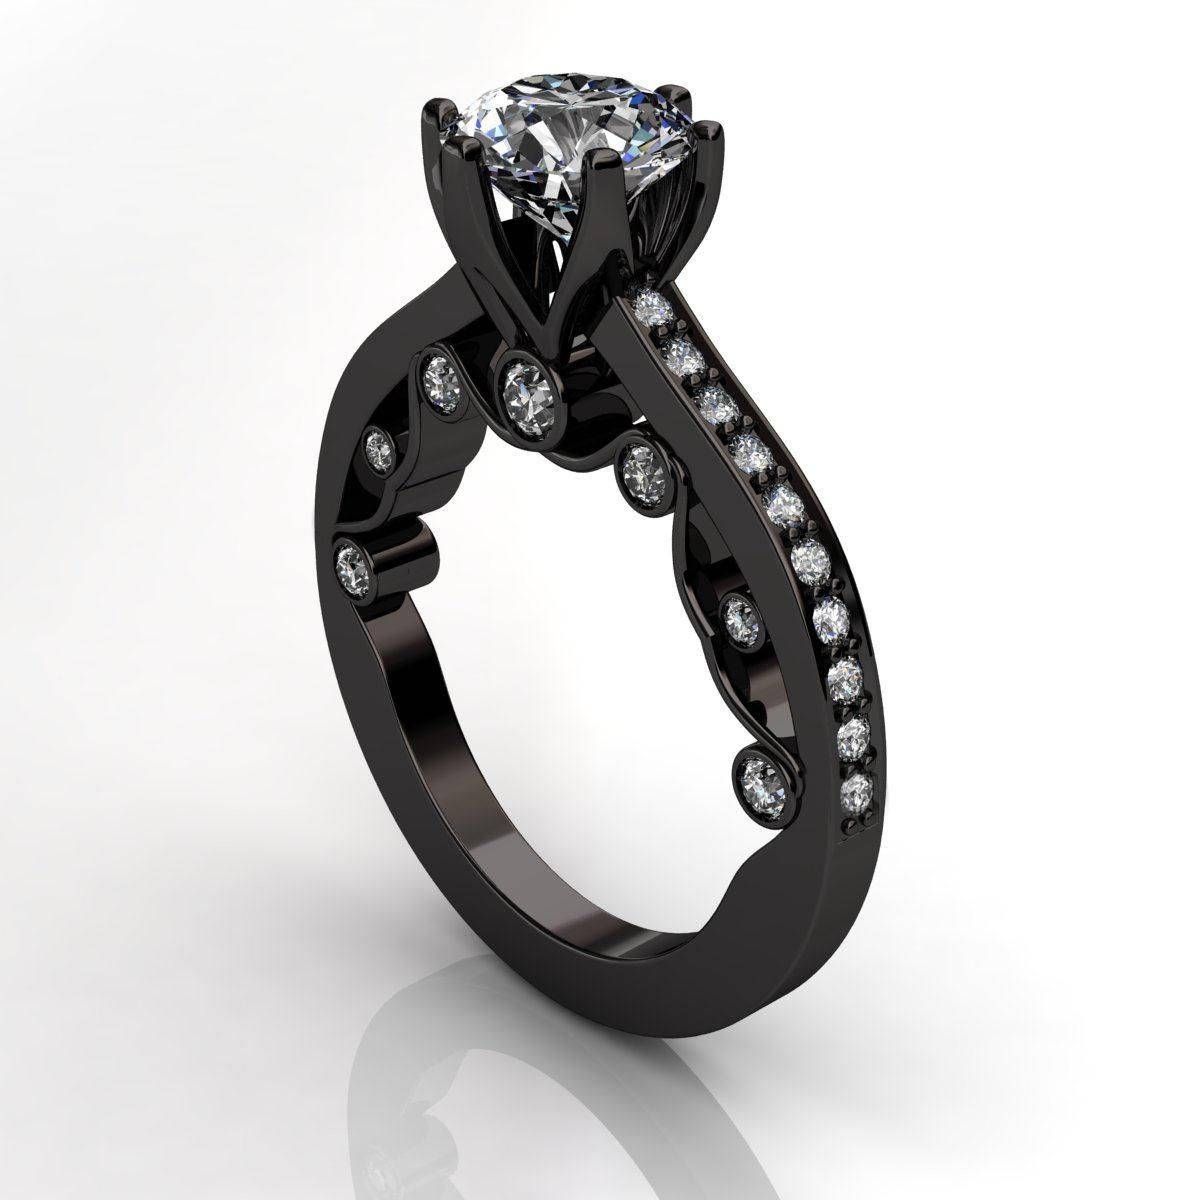 Wedding Rings : Ladies Black Diamond Wedding Rings The Elegant In Black Diamond Wedding Rings For Her (View 12 of 15)